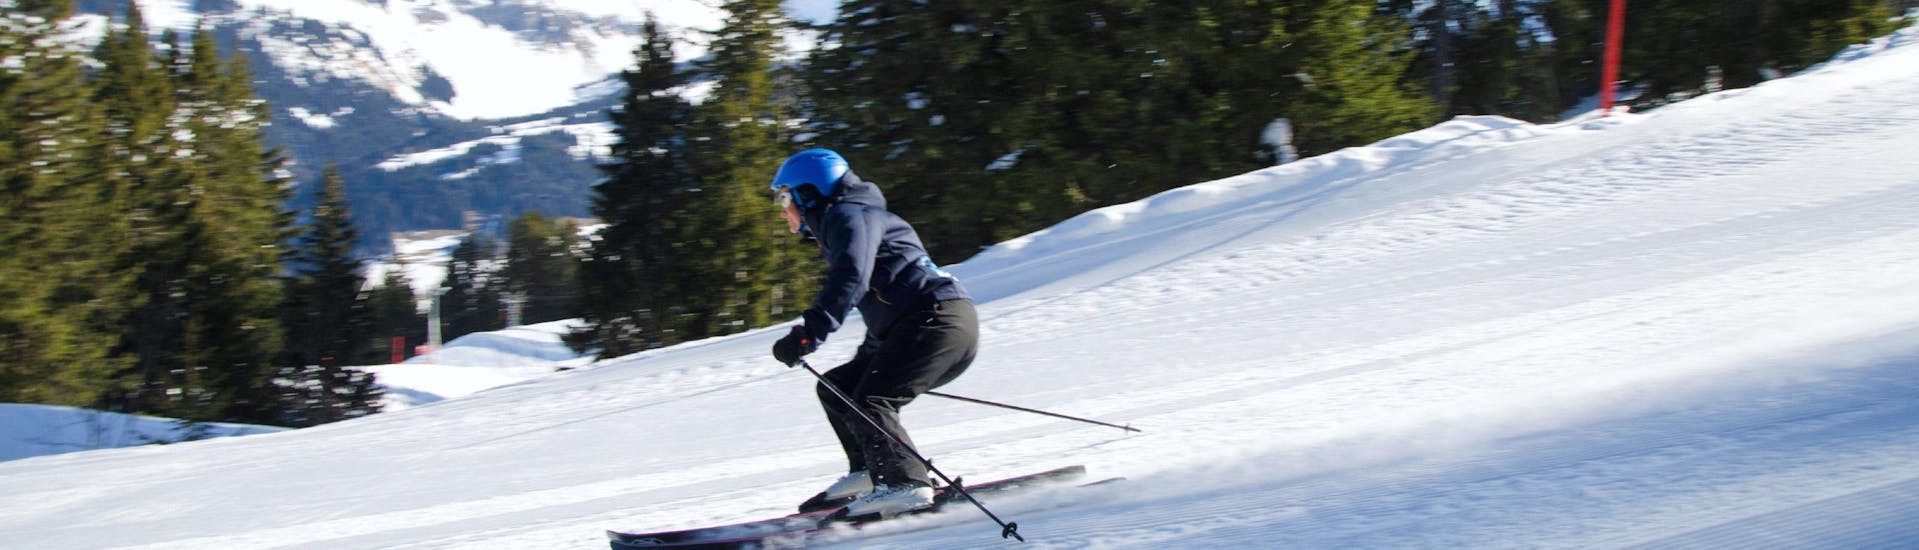 private-ski-lessons-for-adults-glacier-3000-diablerets-pure-trace-hero